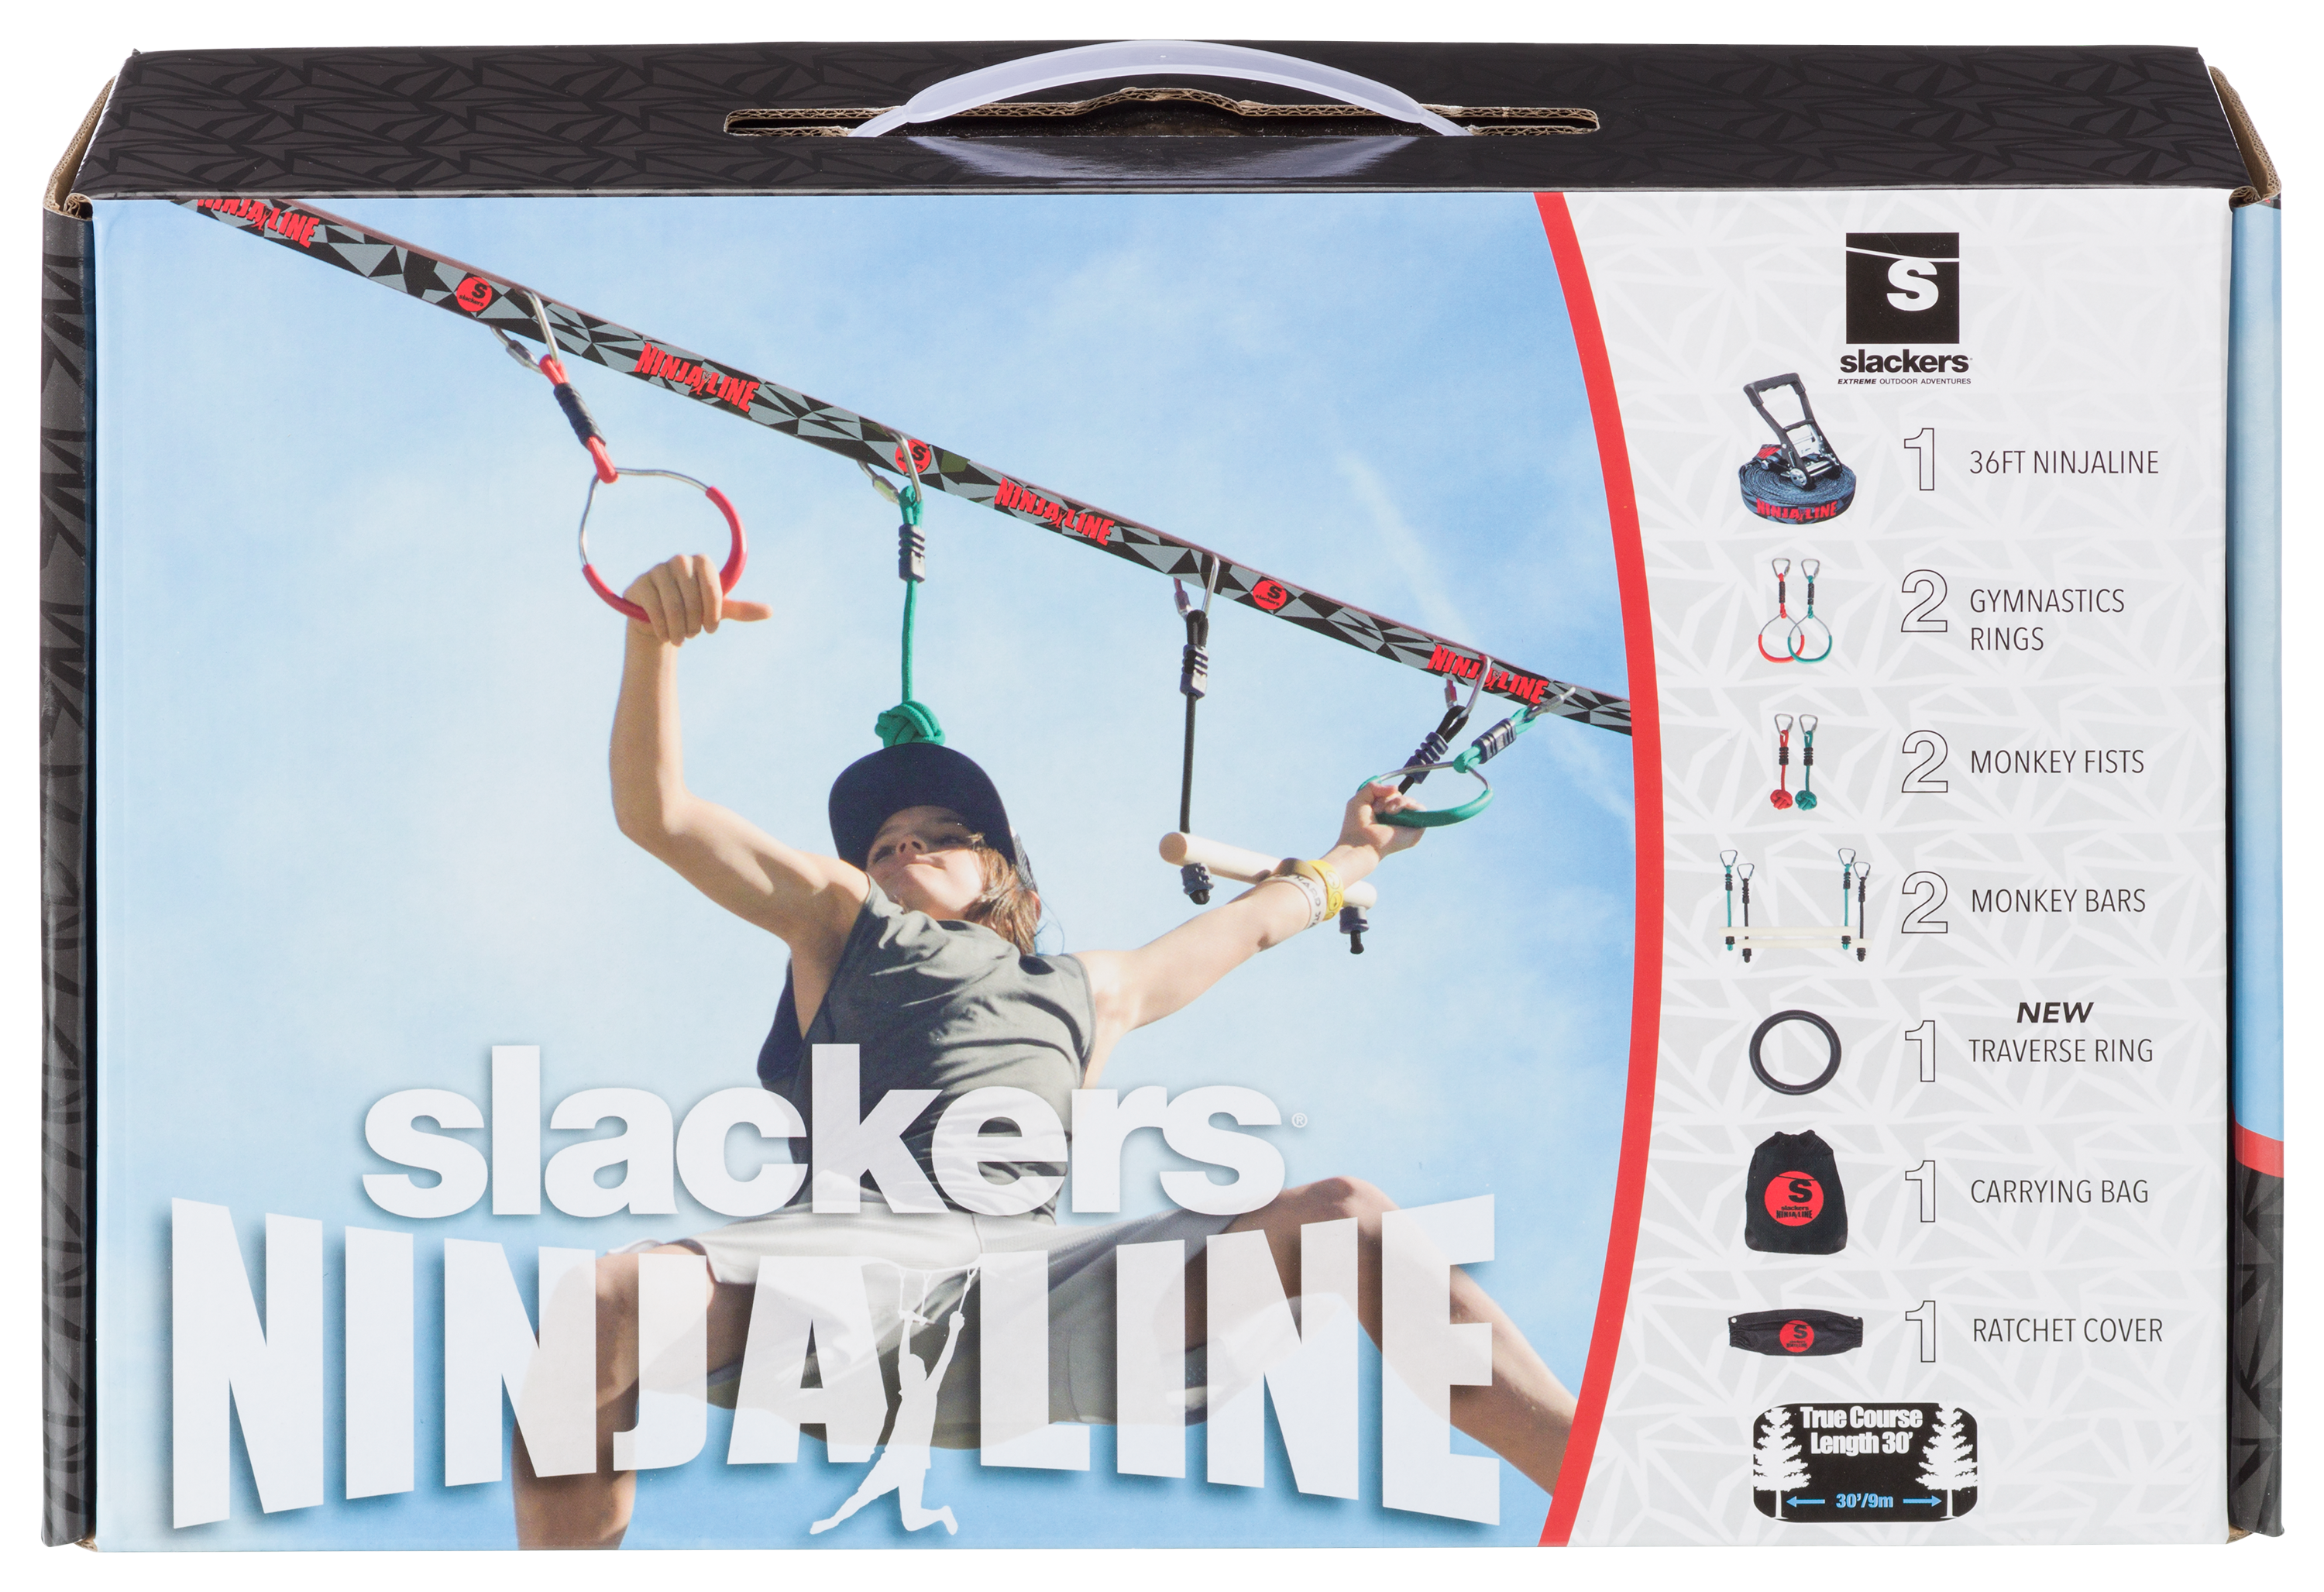 B4 Adventure Slackers Ninjaline 36' Backyard Outdoor Hanging Obstacle Intro  Kit Bass Pro Shops